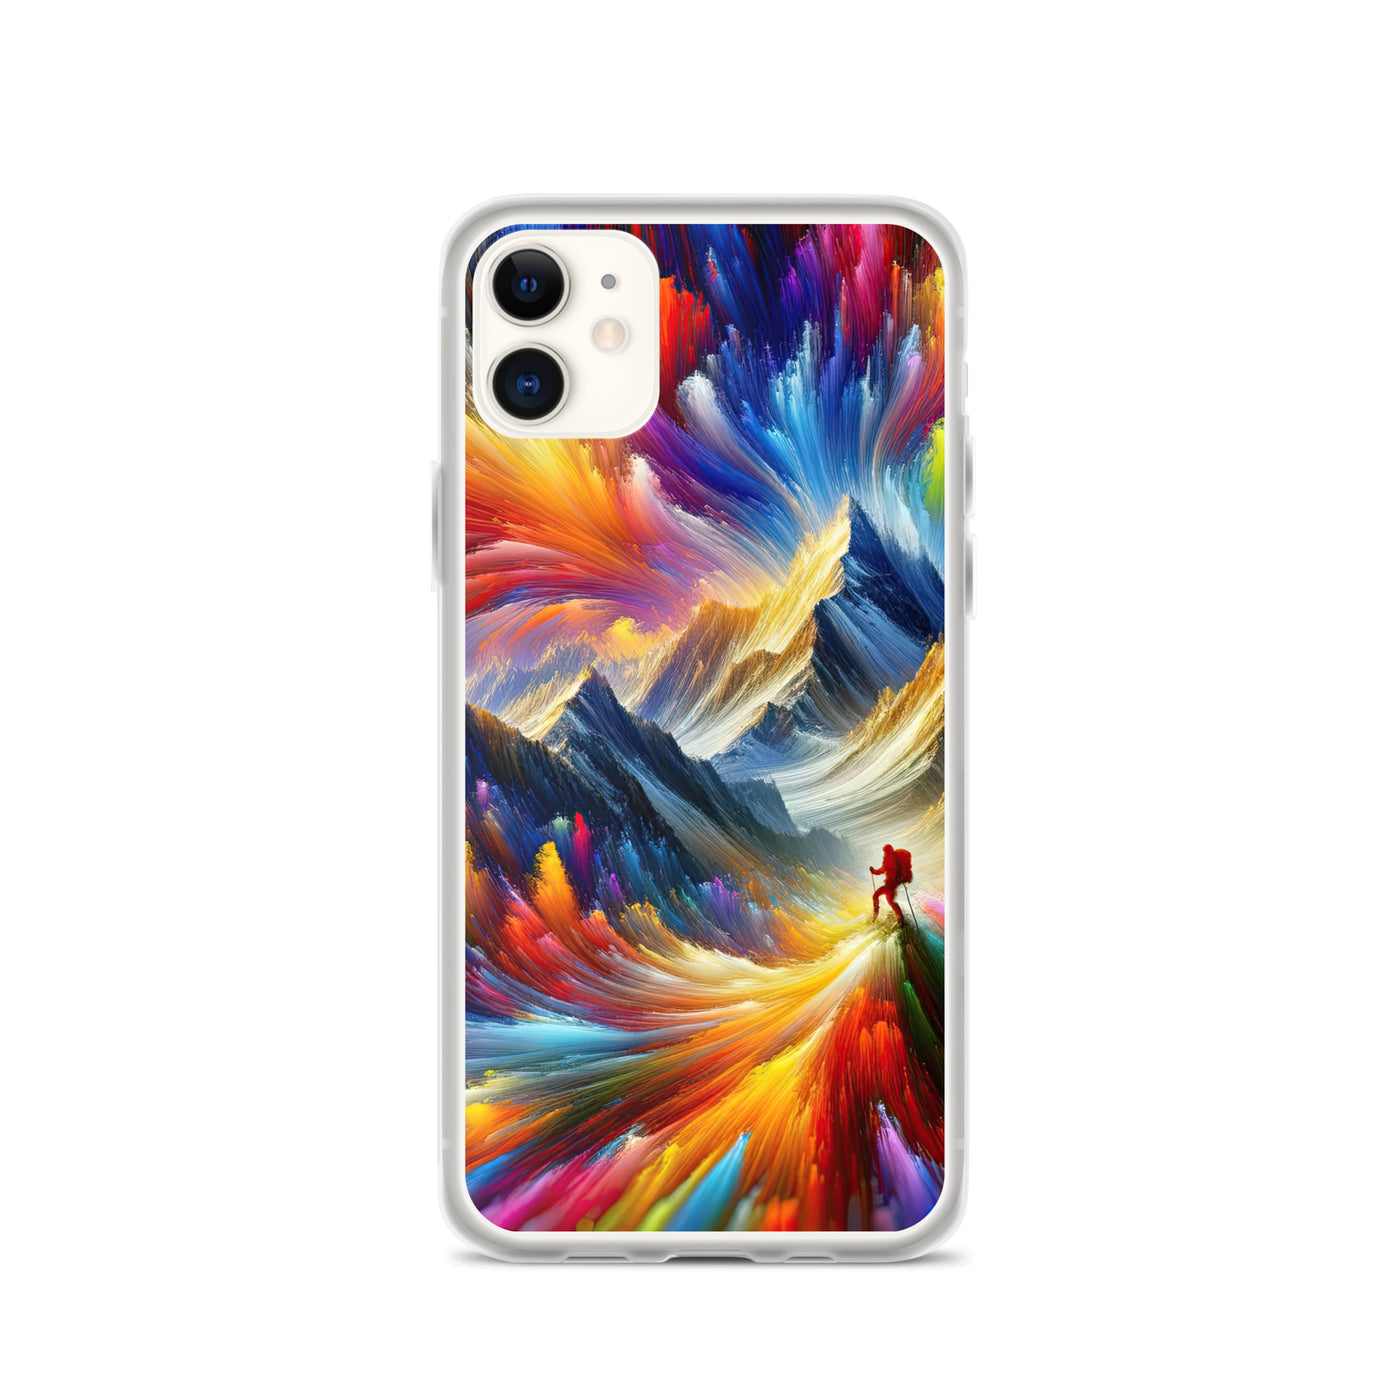 Alpen im Farbsturm mit erleuchtetem Wanderer - Abstrakt - iPhone Schutzhülle (durchsichtig) wandern xxx yyy zzz iPhone 11